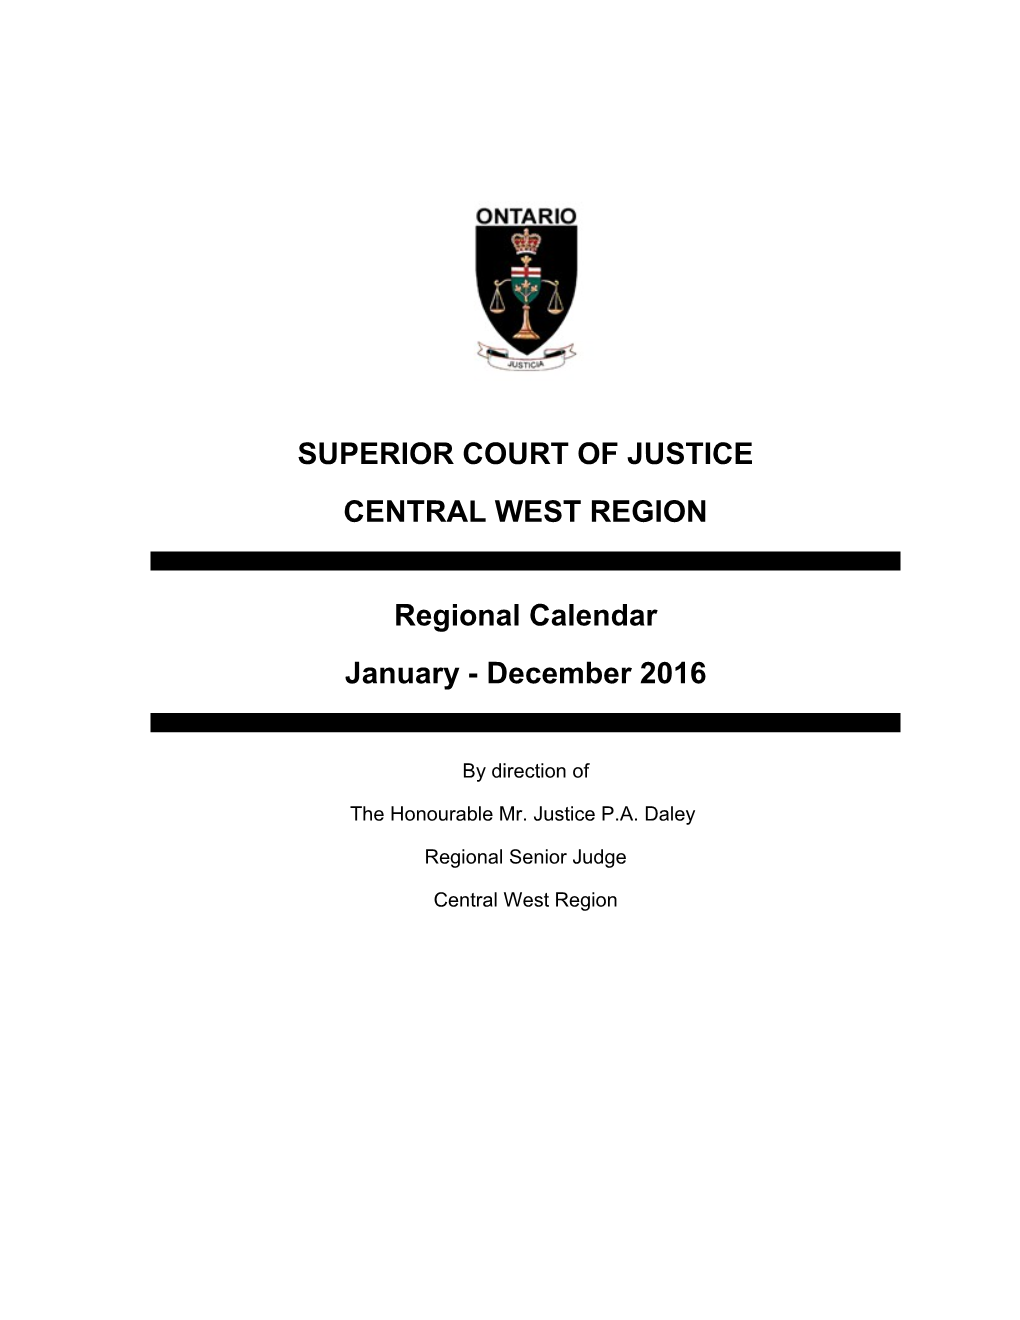 Central West Regional Calendar - January to December 2016